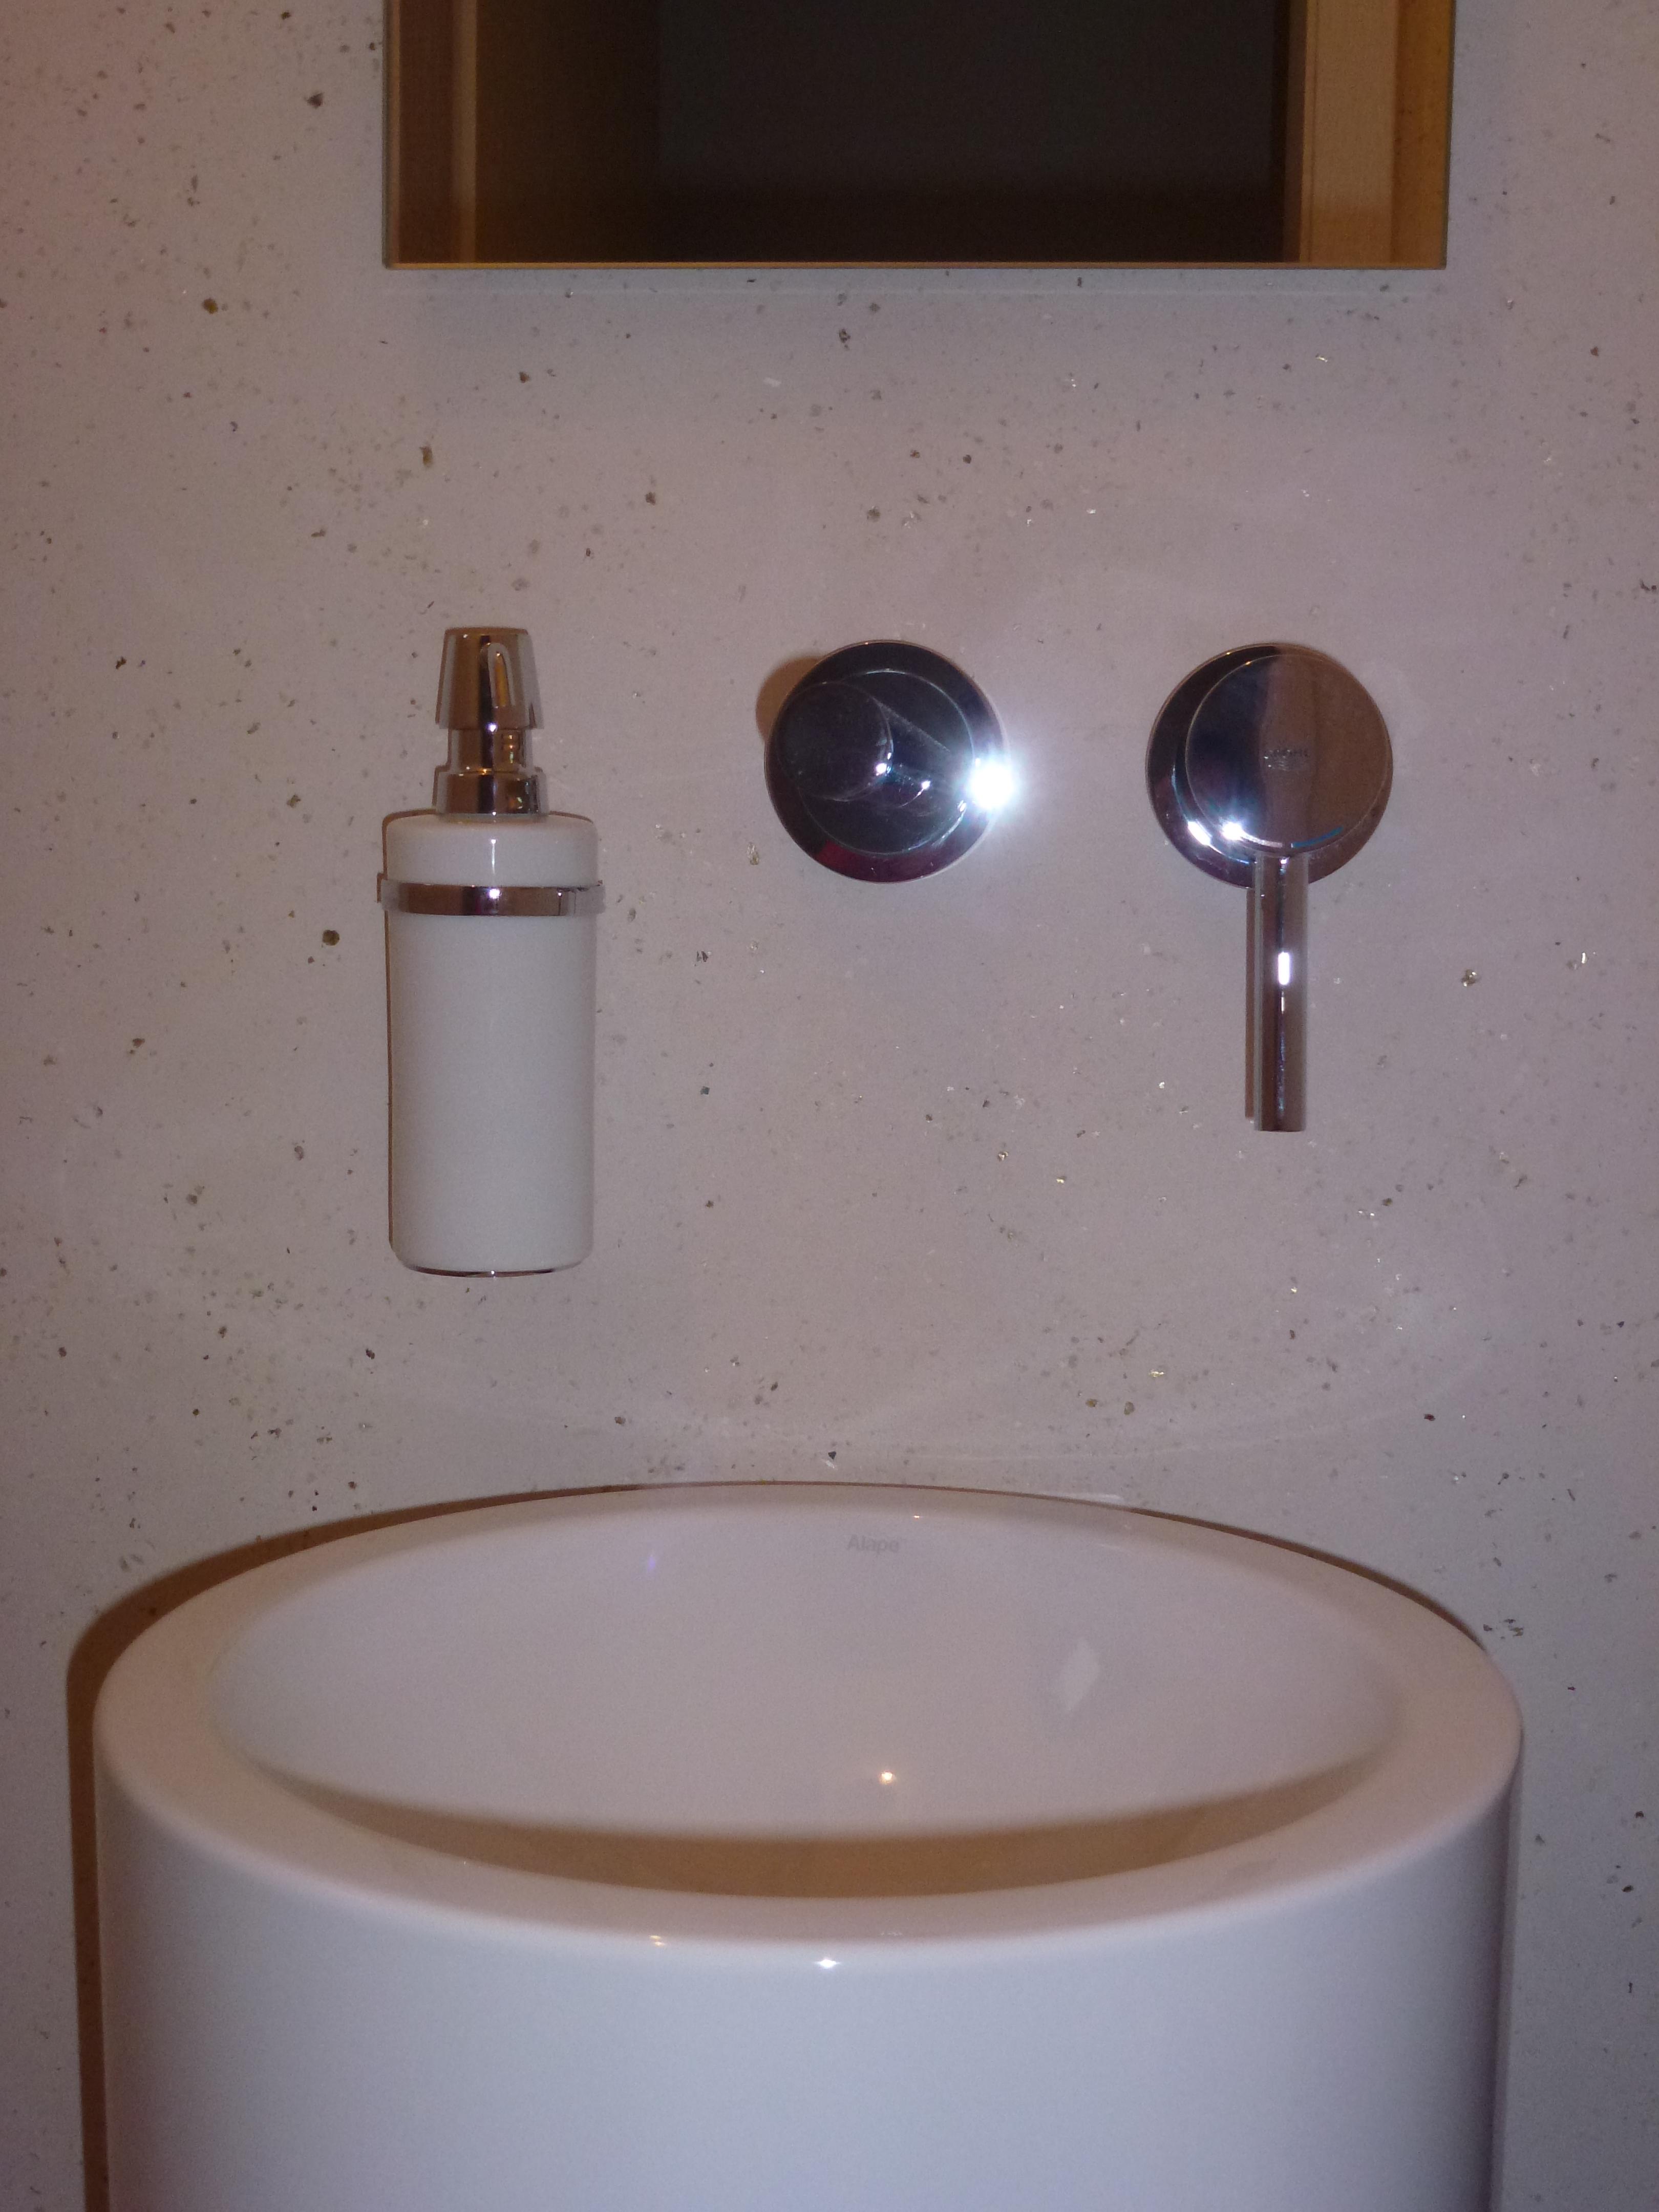 Handwaschbecken #seifenspender ©Birgit Mohrig